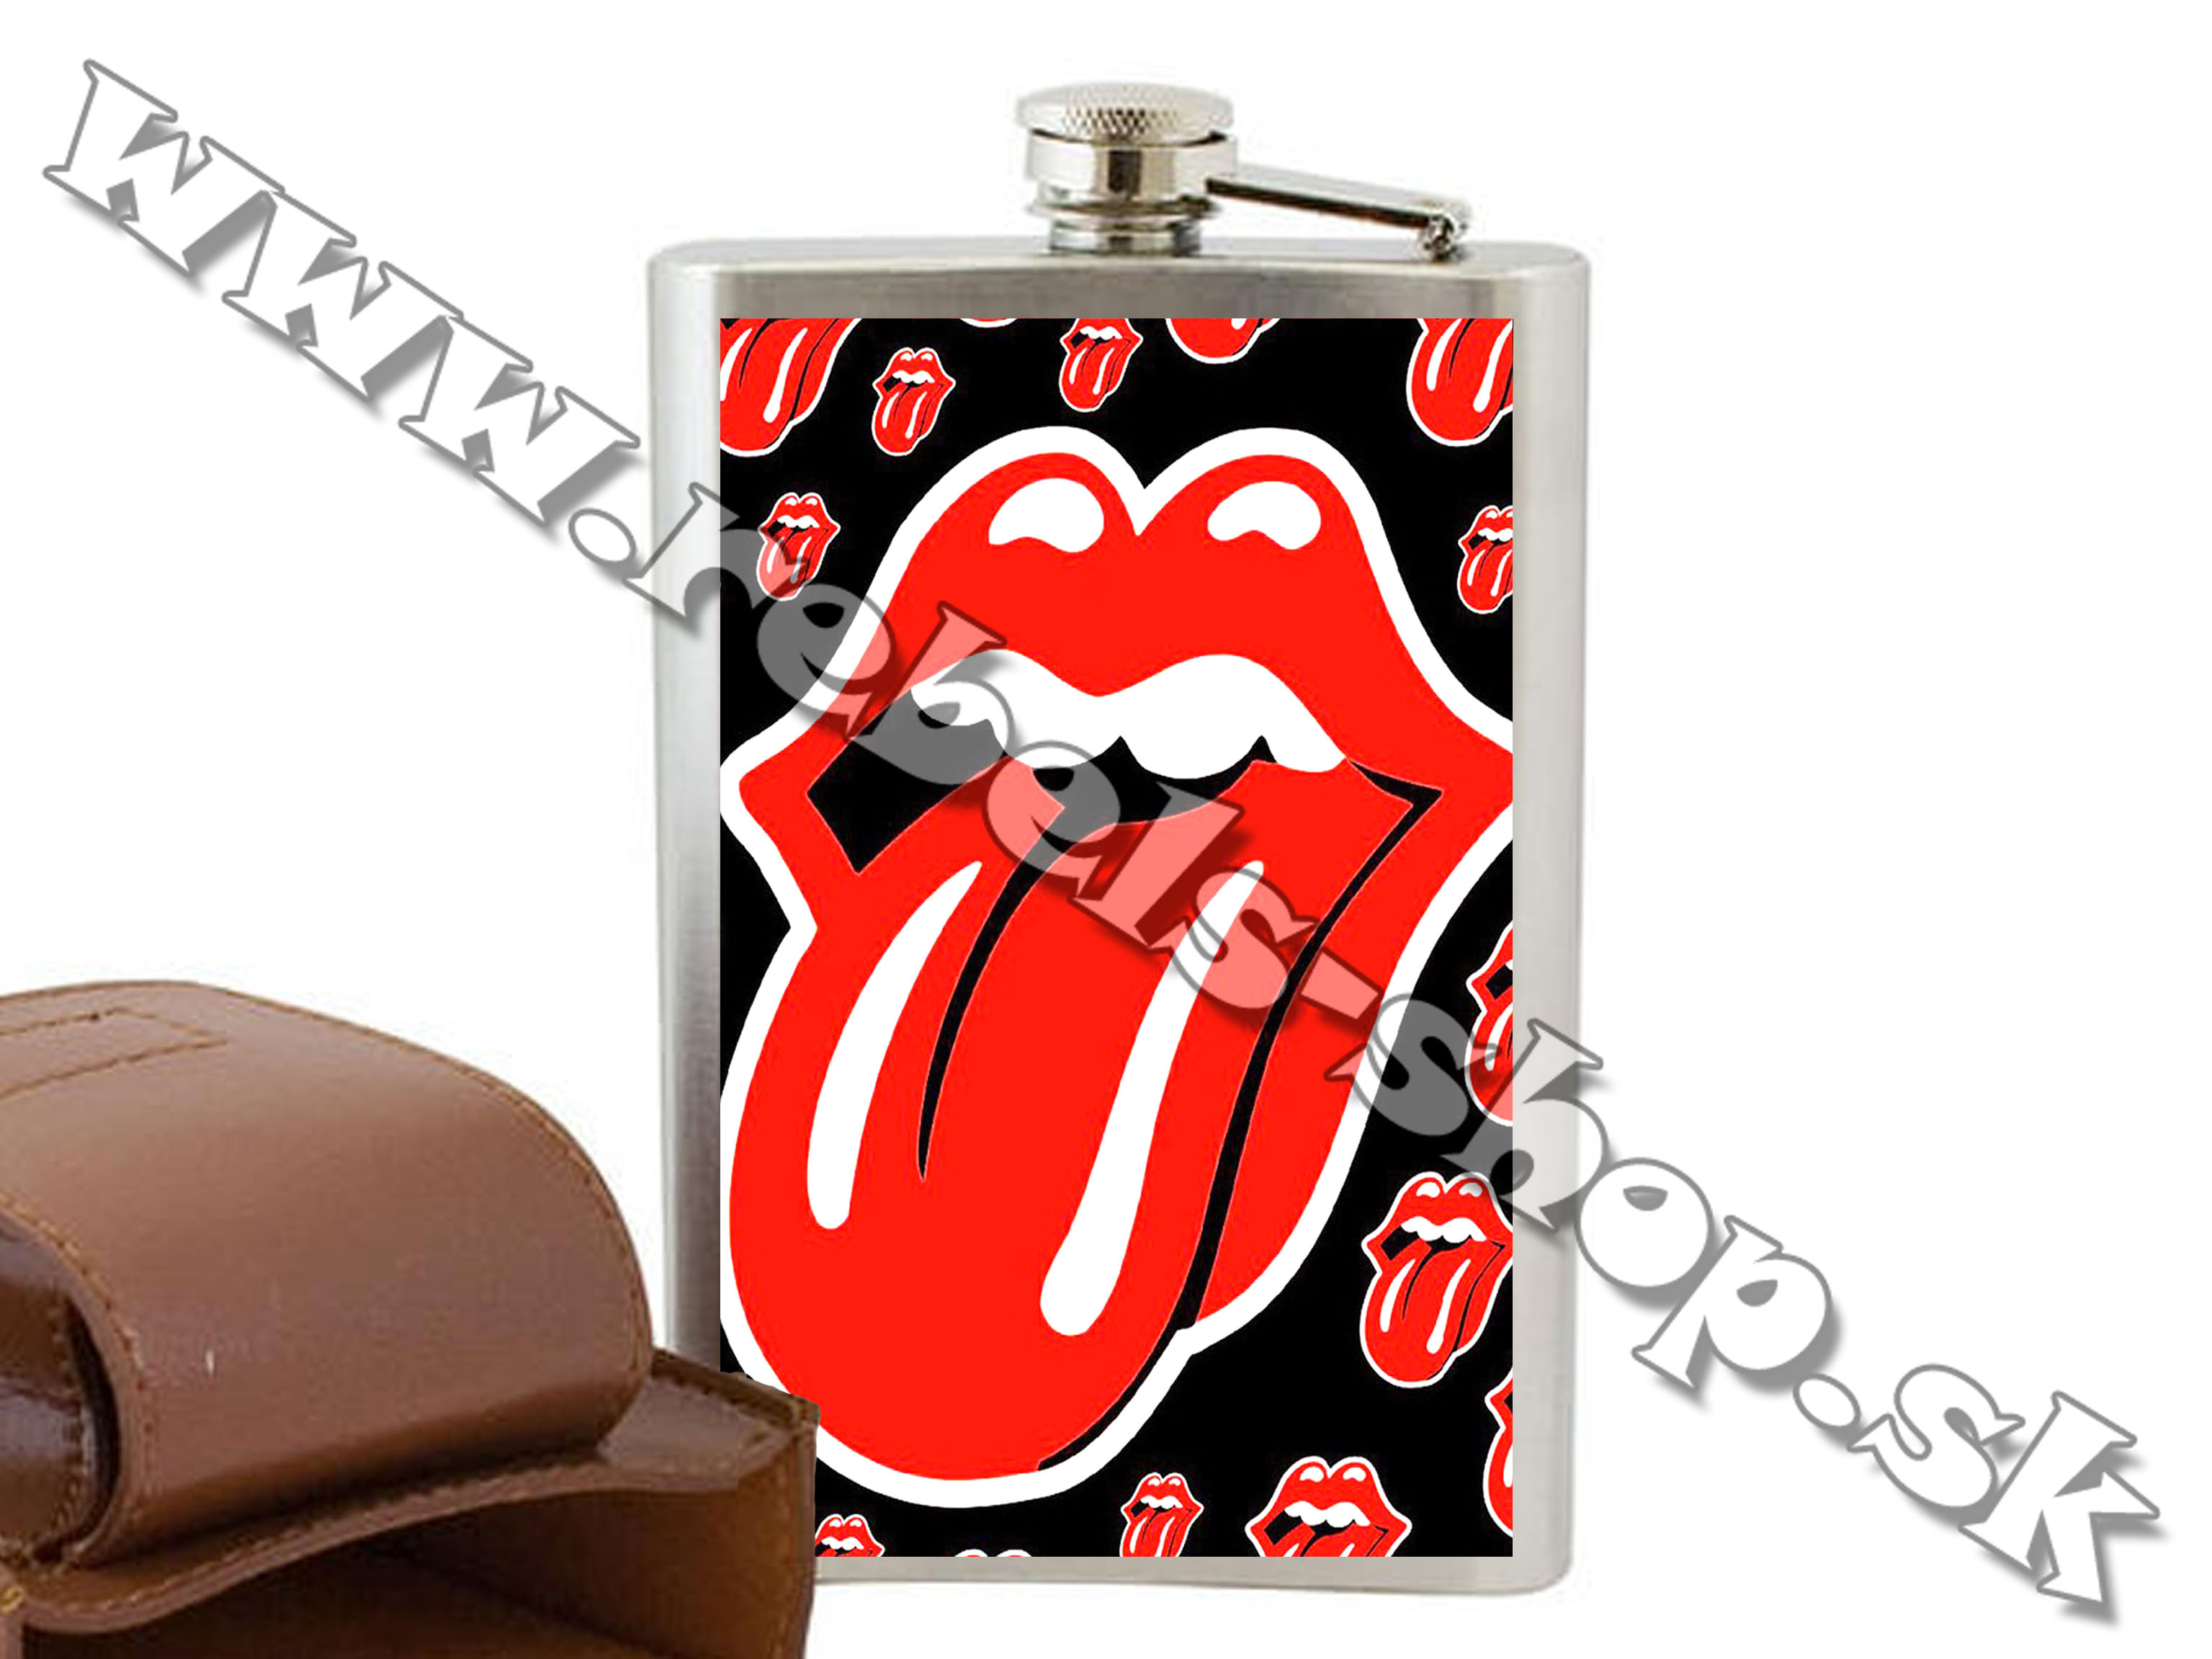 Ploskačka "The Rolling Stones"